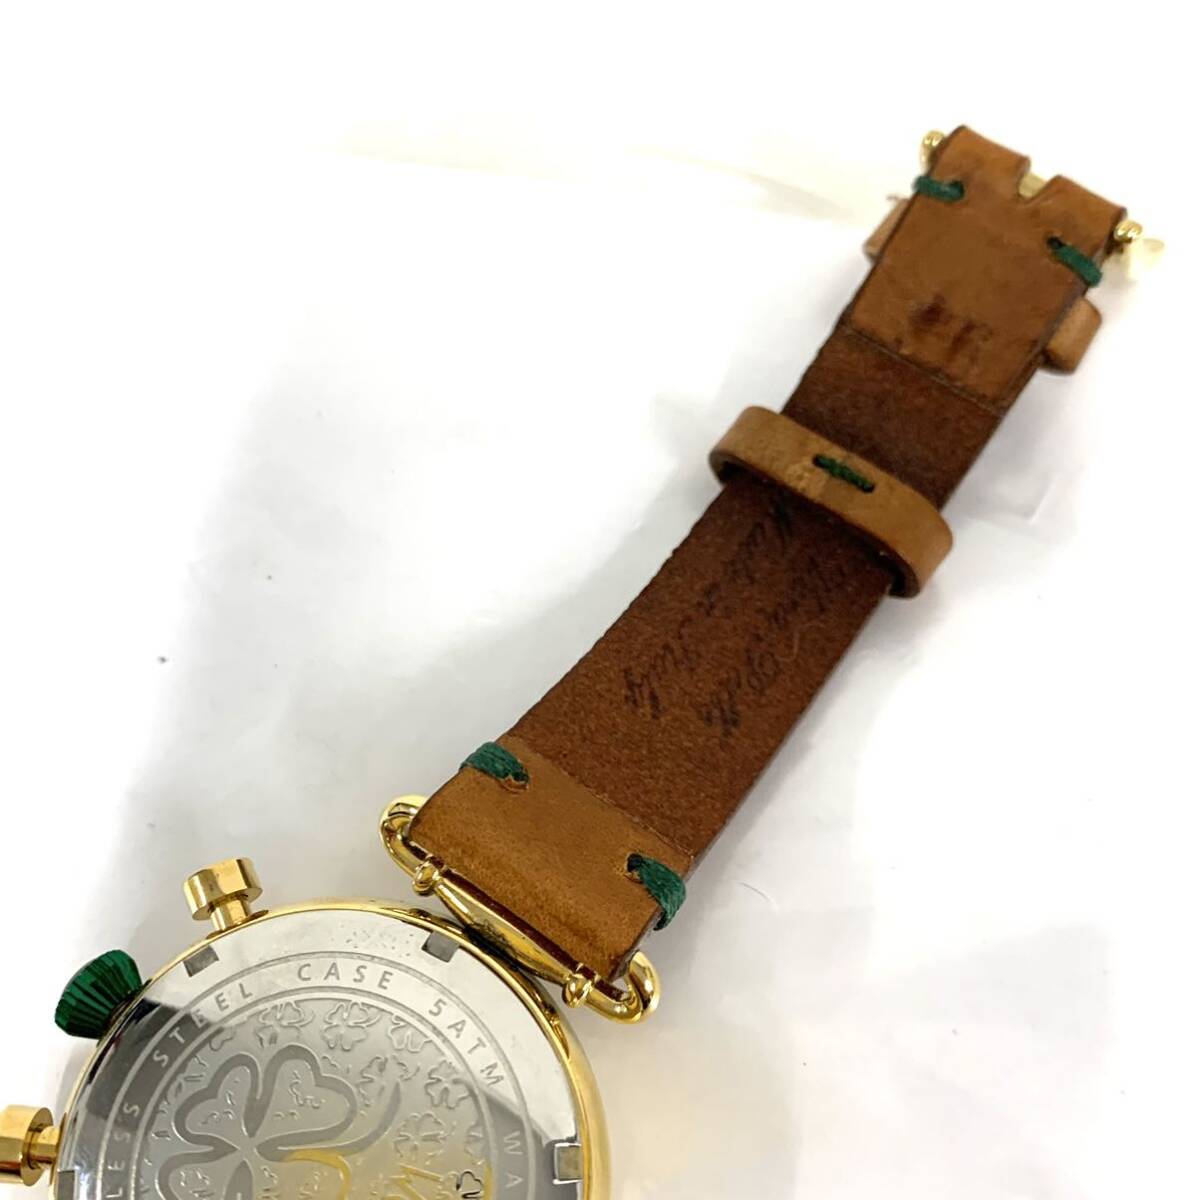  operation not yet verification antique ATOM Milano/ Atom milano wristwatch chronograph quartz leather belt AT0002 present condition goods ka15